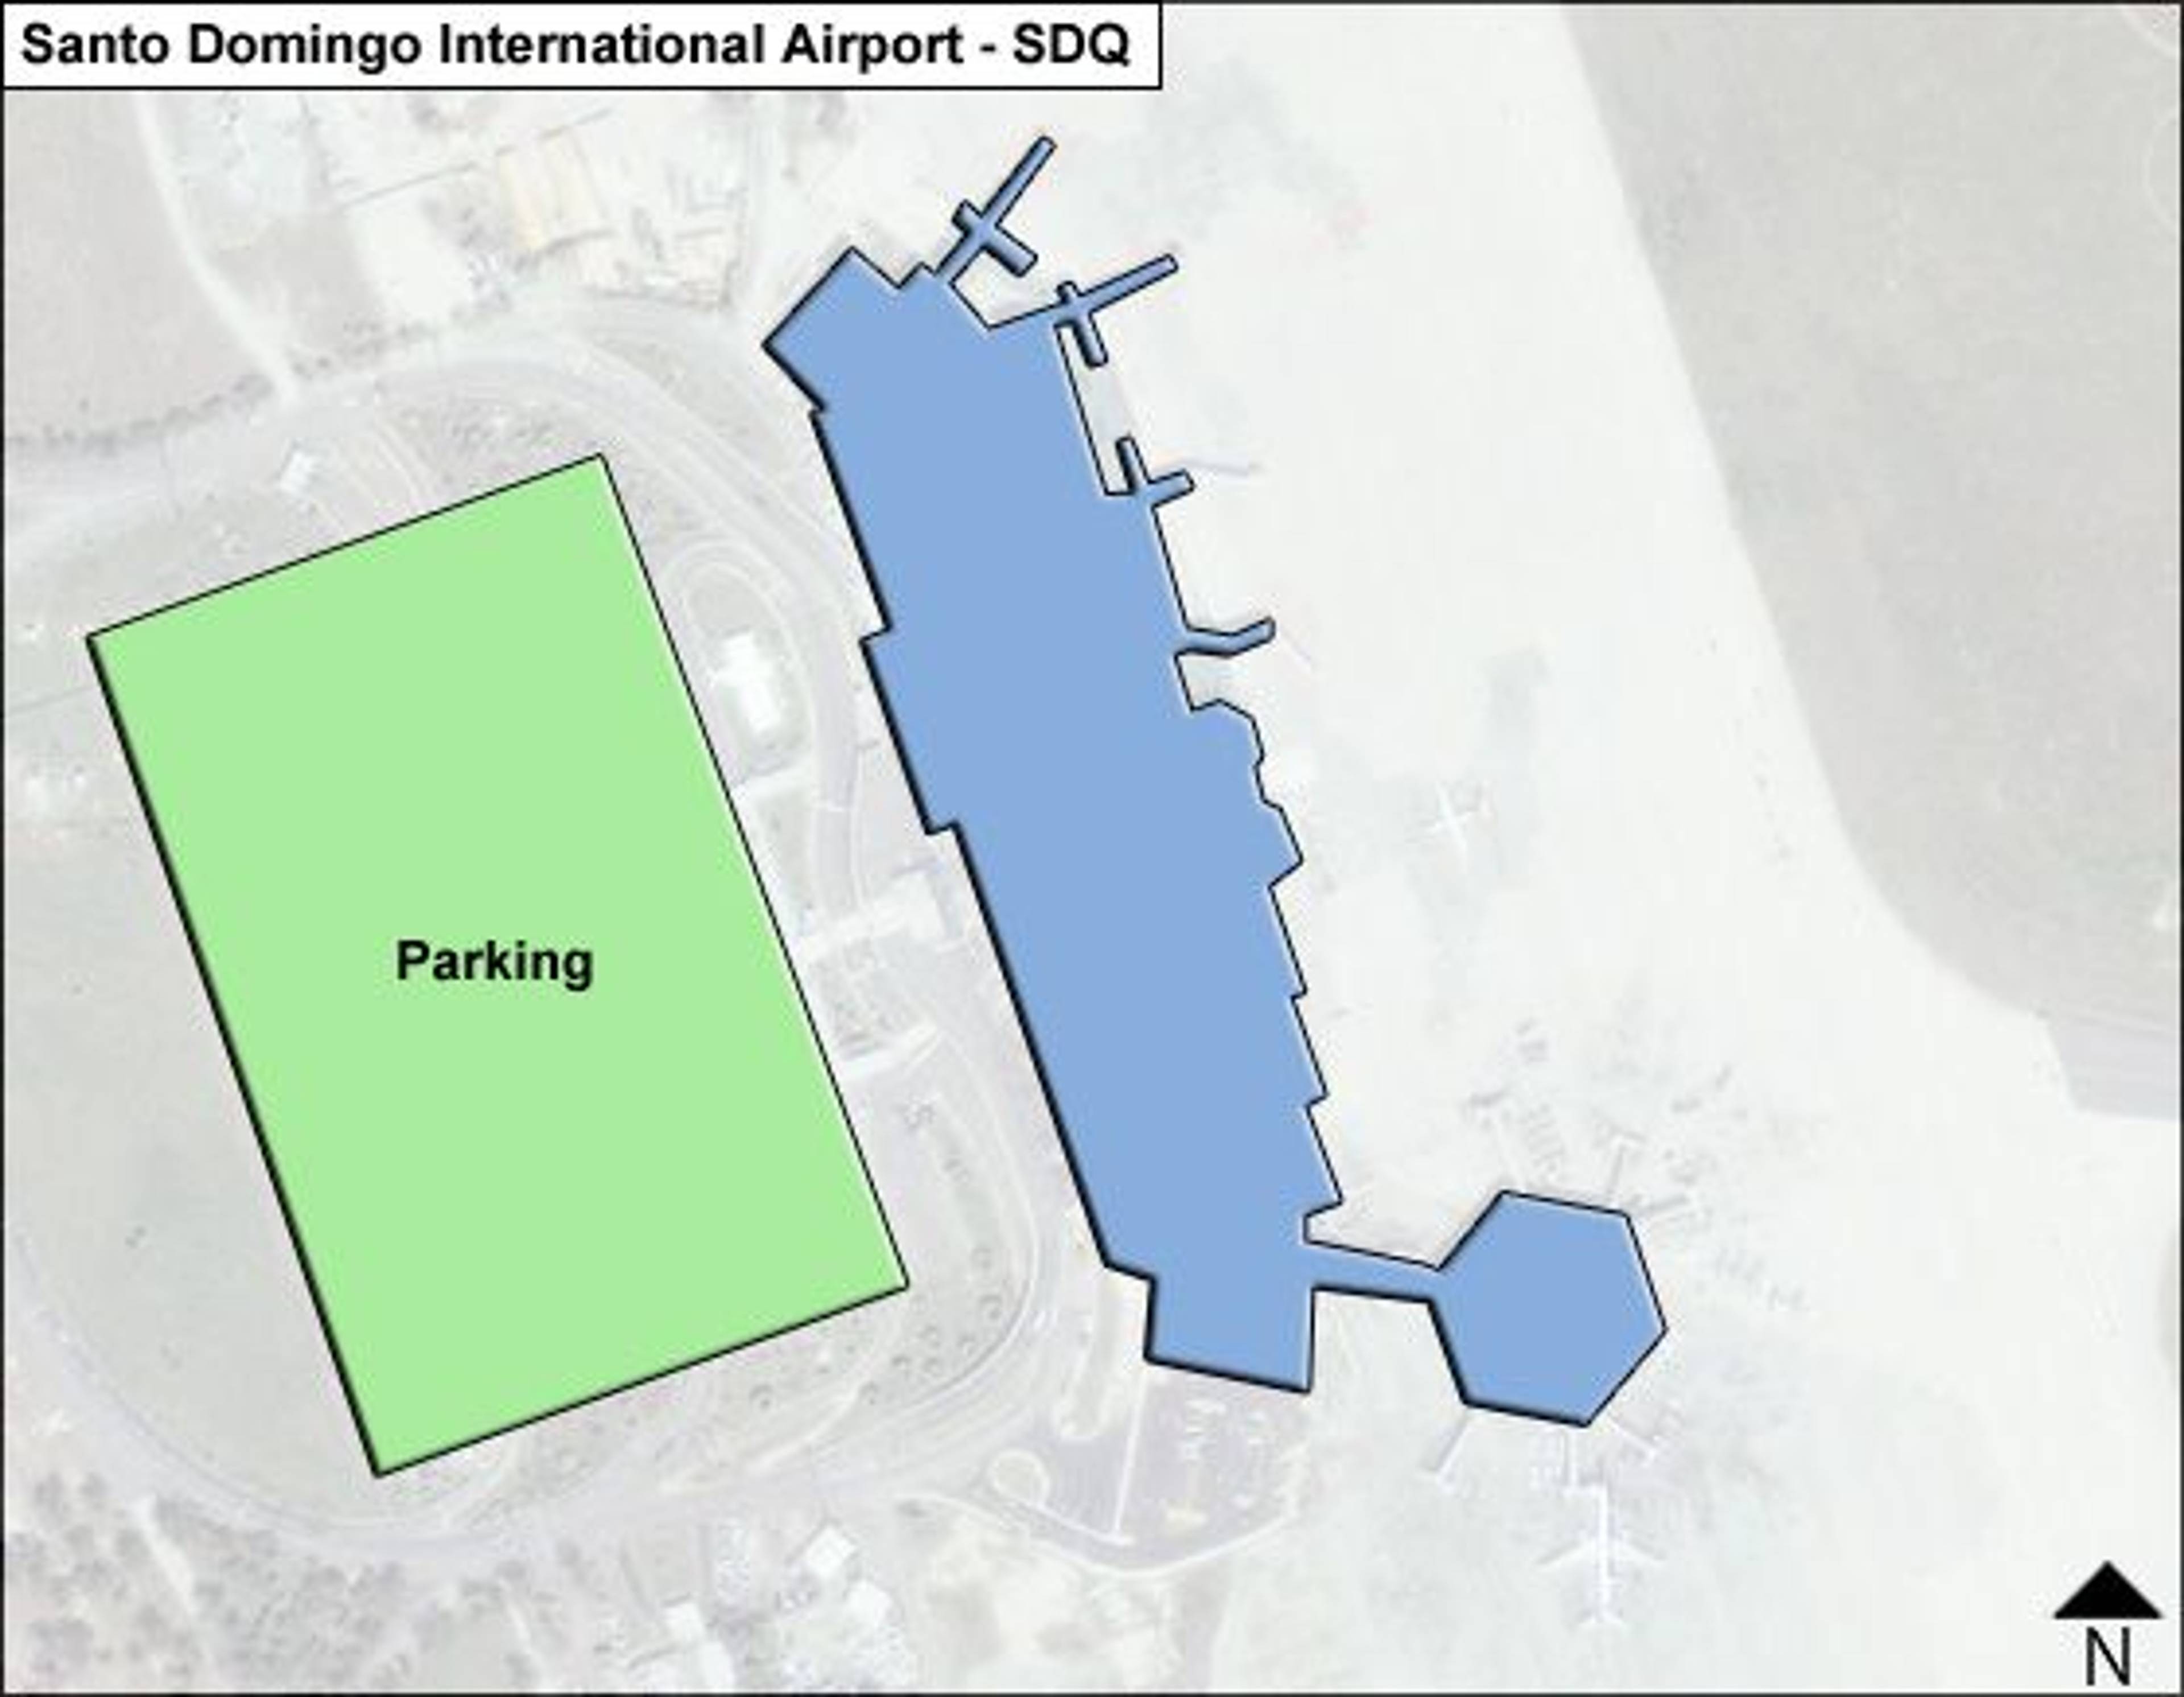 Boca Chica, Santa Domingo Airport Overview Map